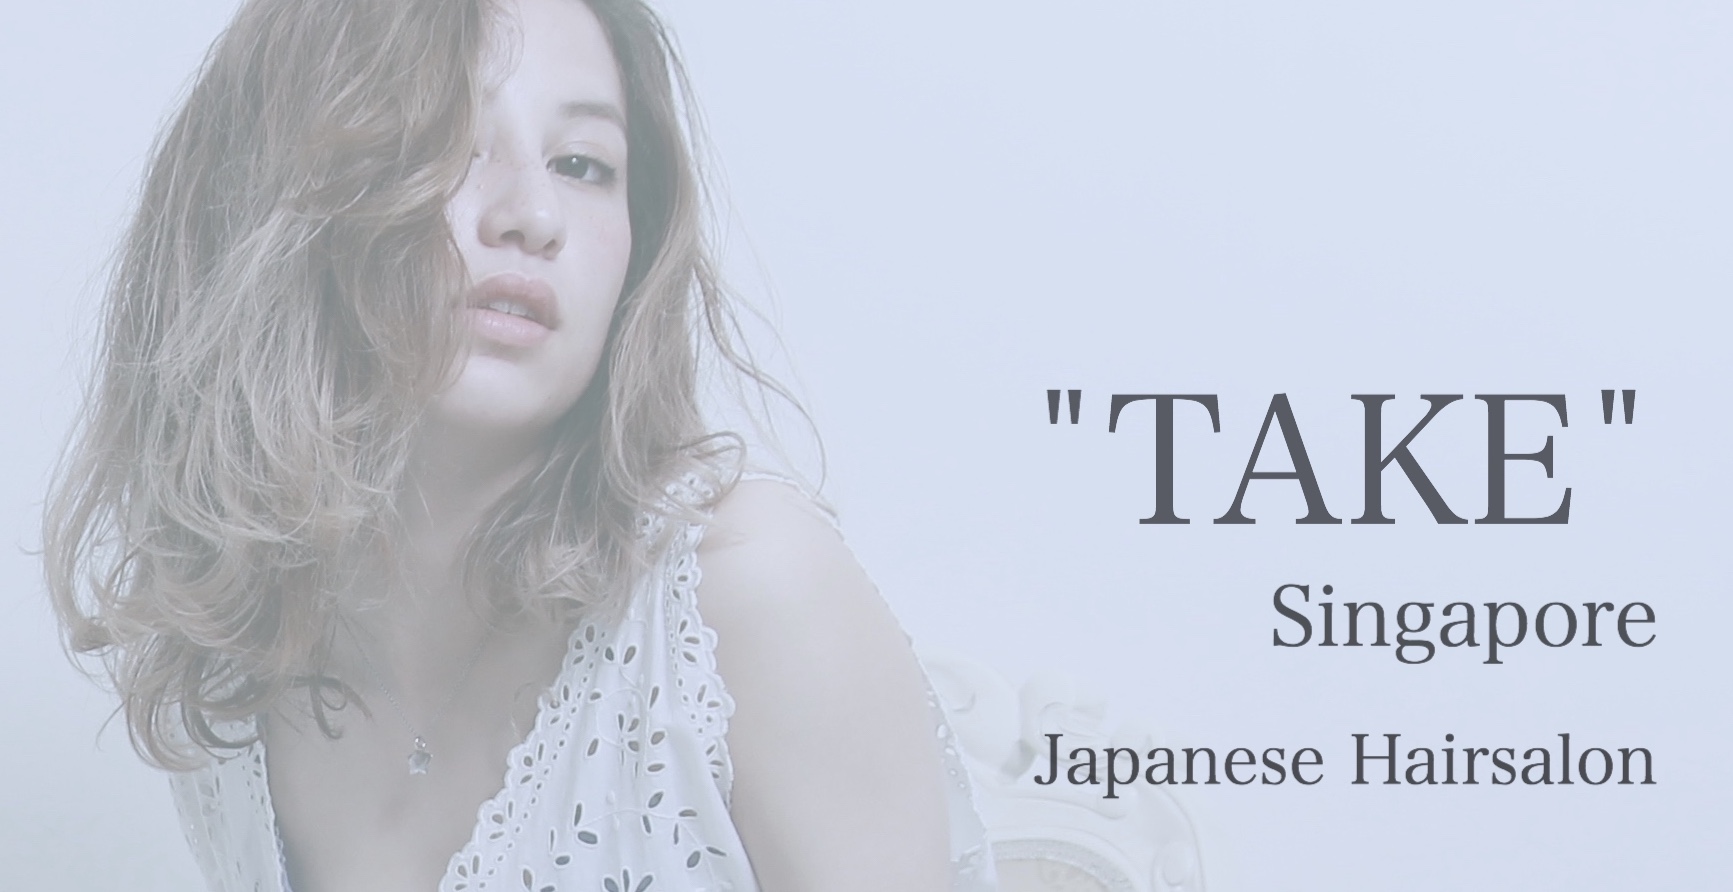 “TAKE” Singapore Japanese Hair salonトレンドを加味した上質なヘアスタイルを提案